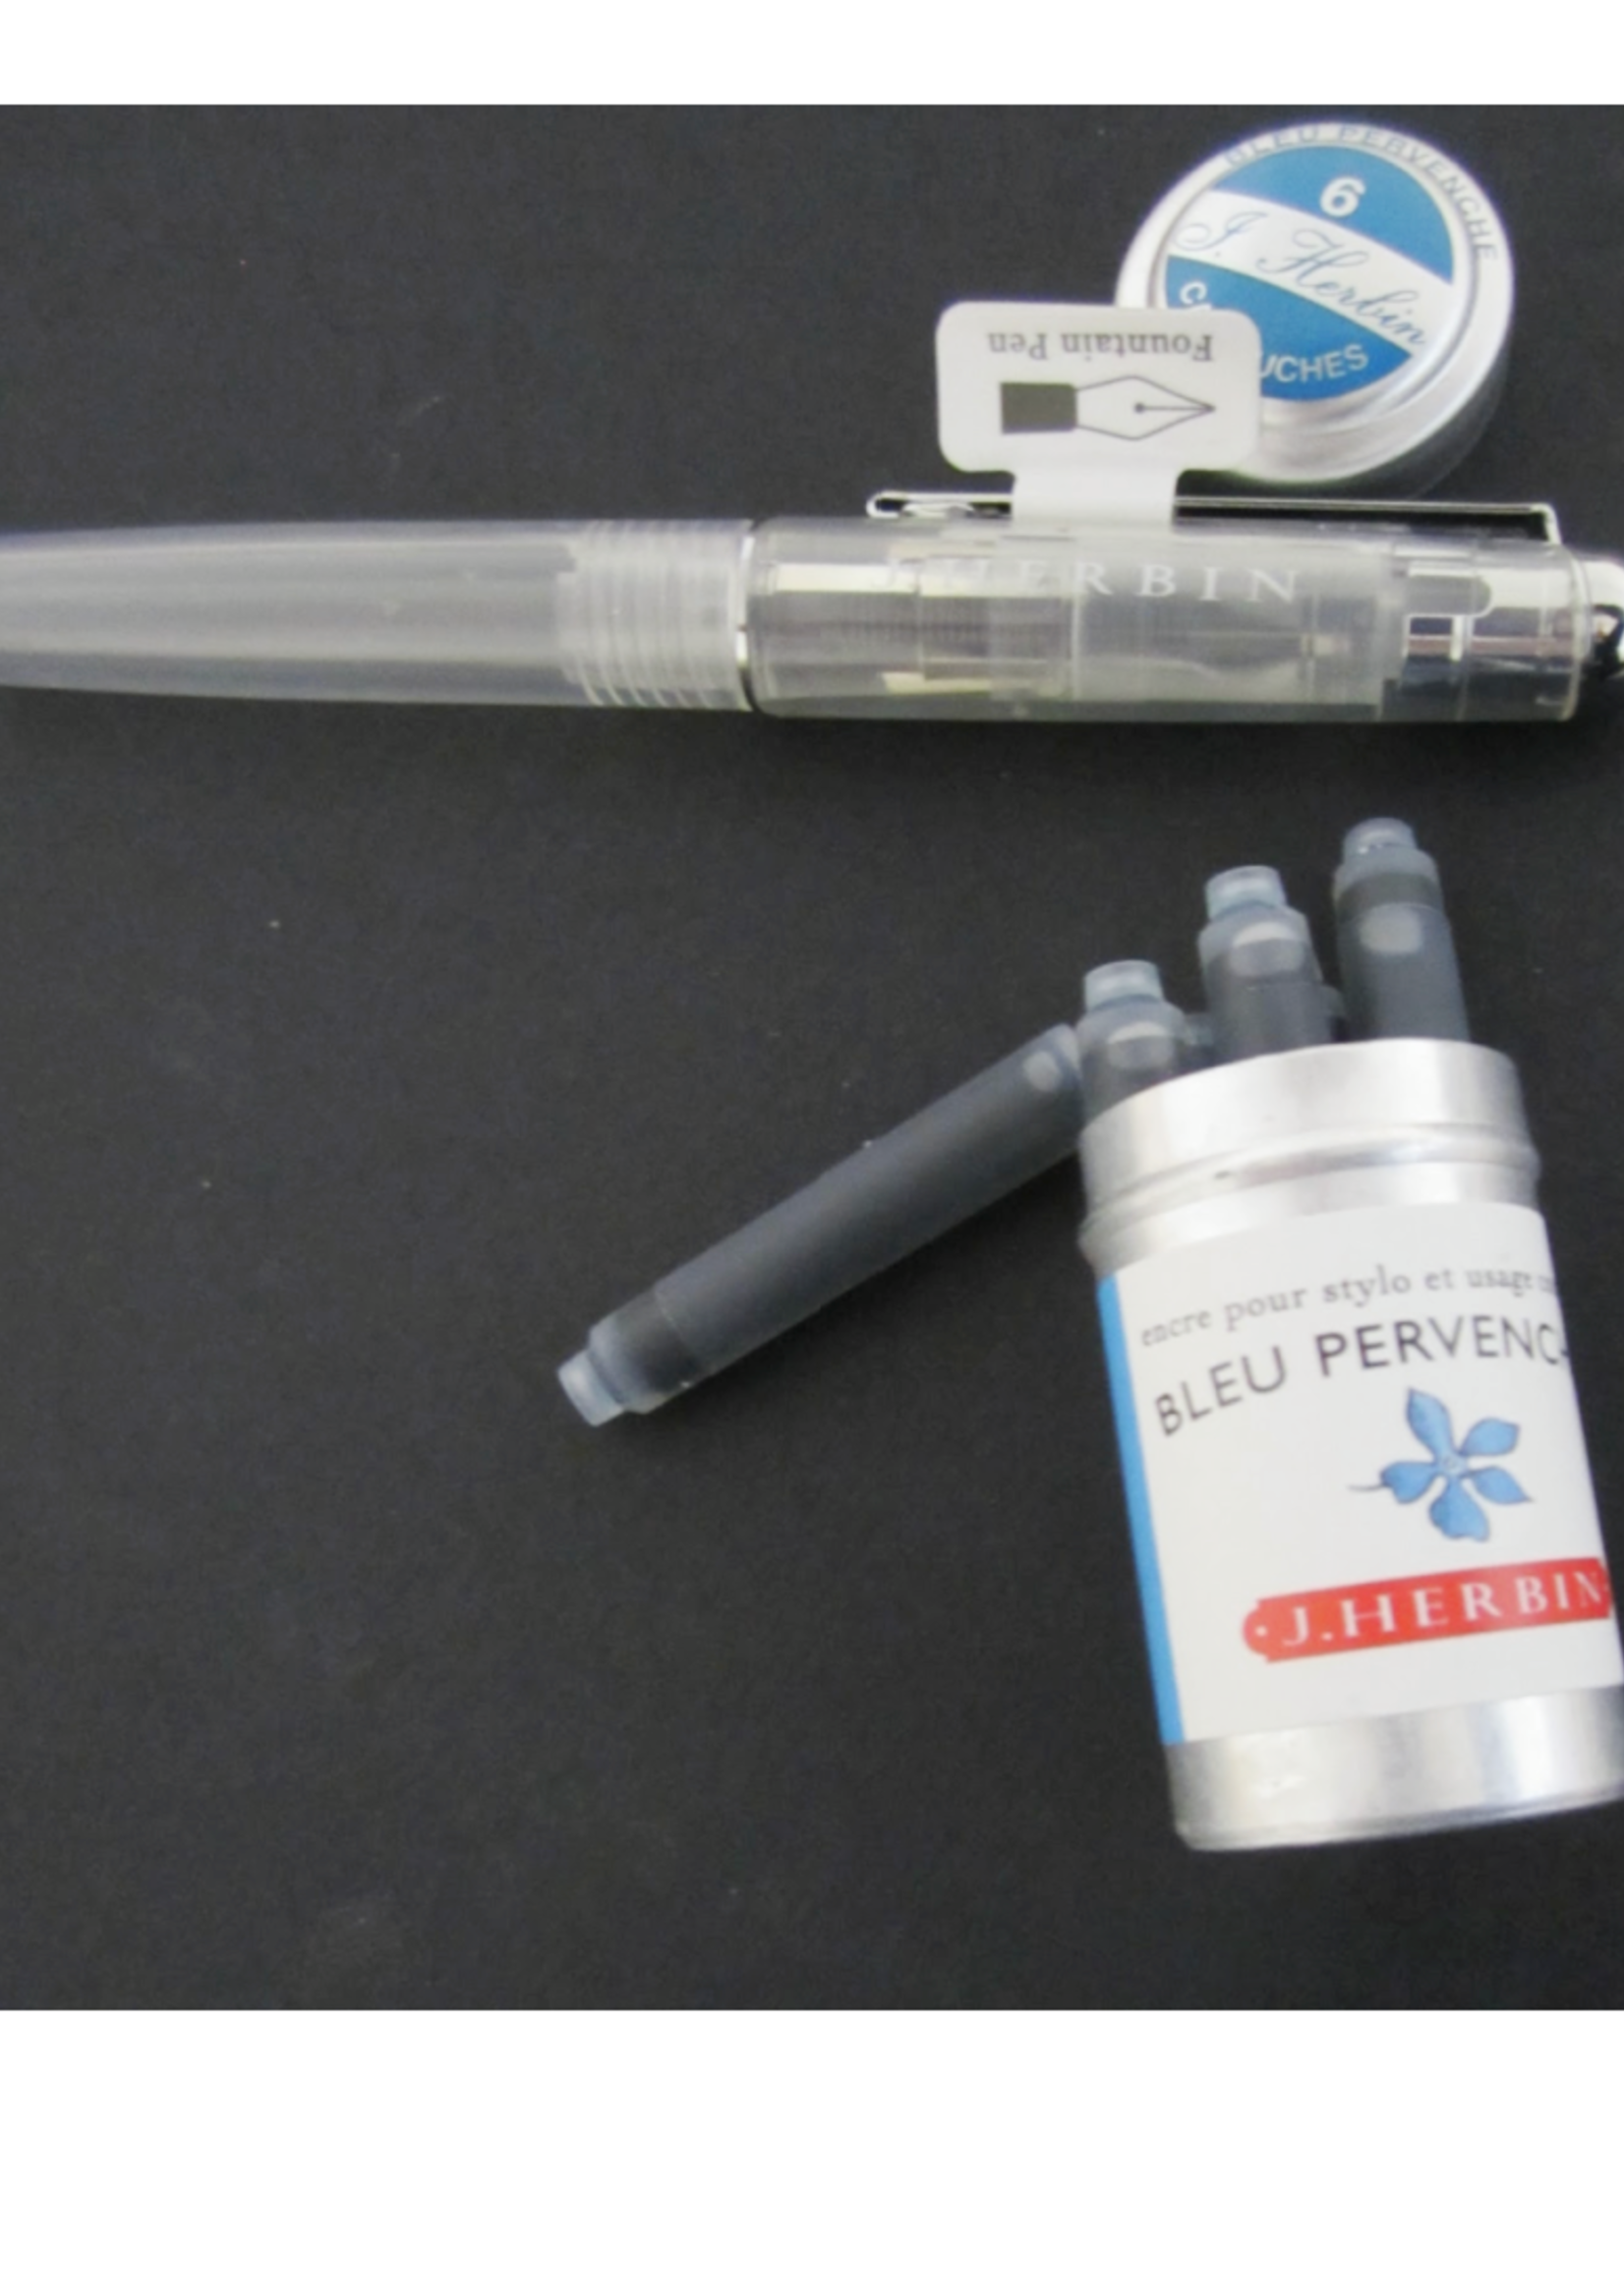 Exaclair Herbin "Demonstrator" Cartridge Fountain Pen